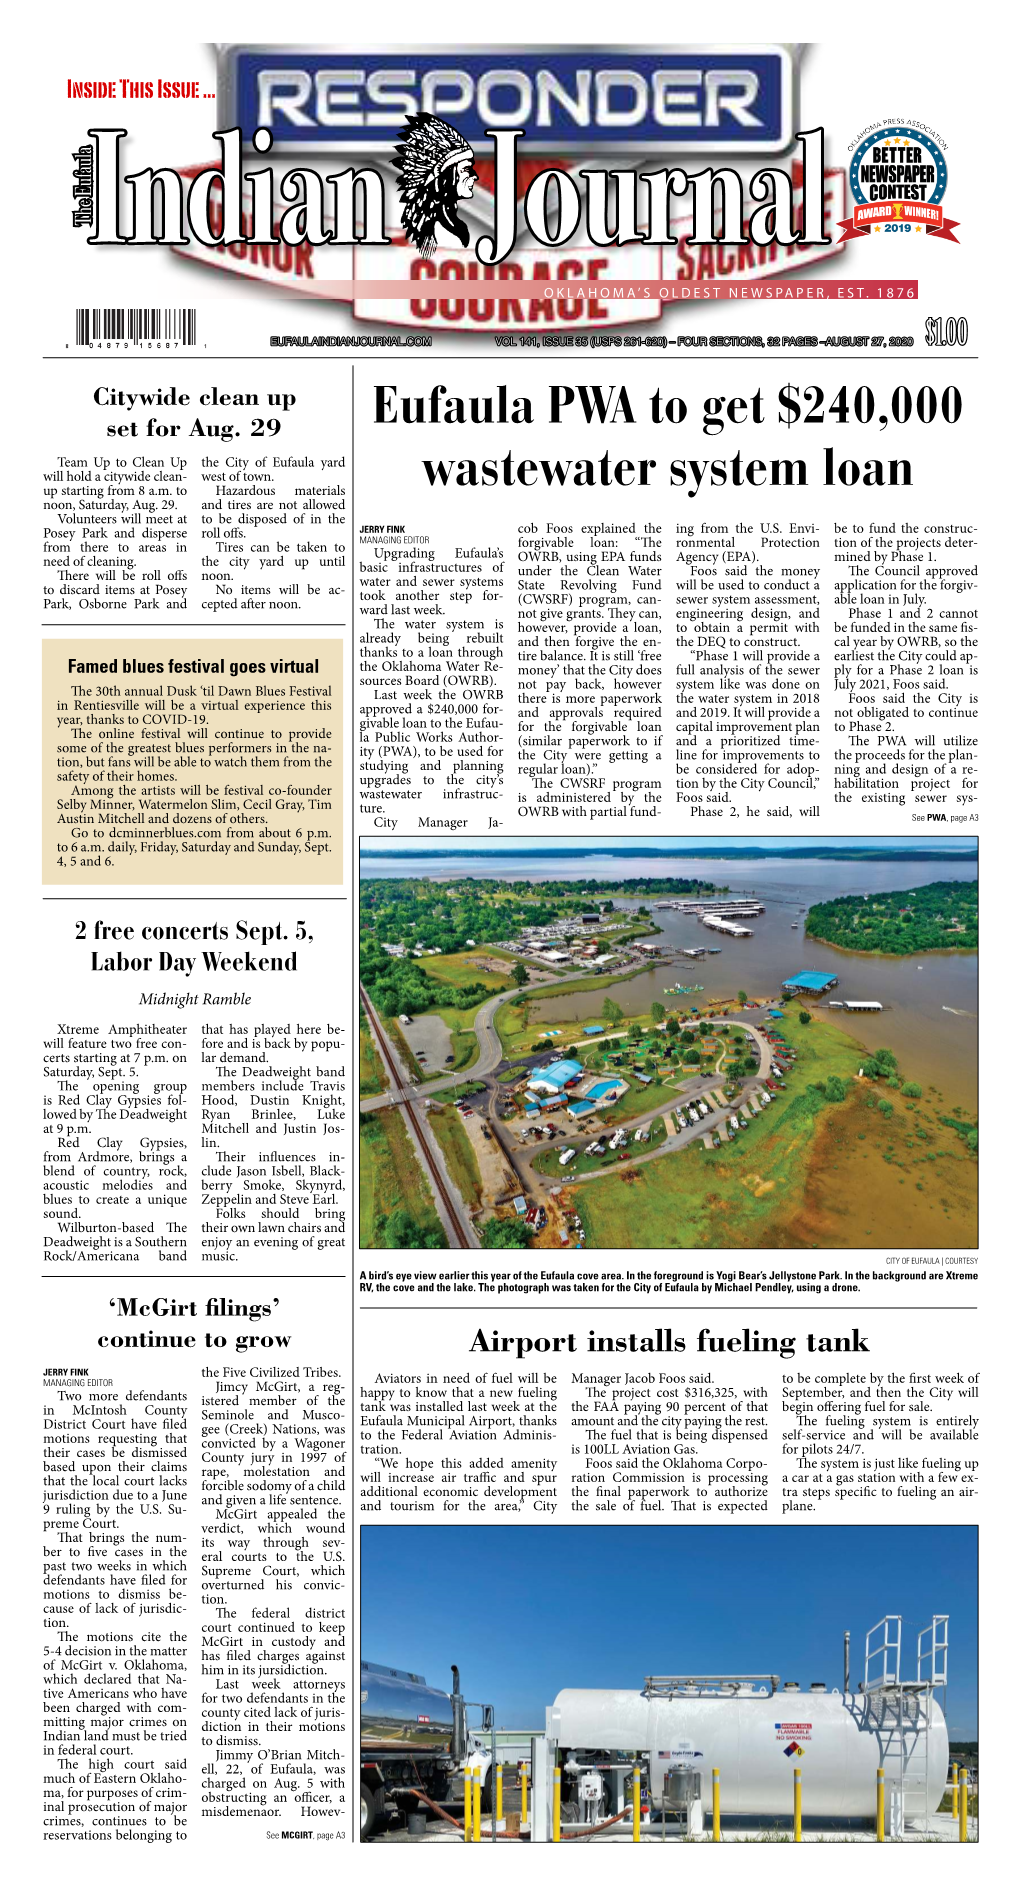 Eufaula PWA to Get $240,000 Wastewater System Loan